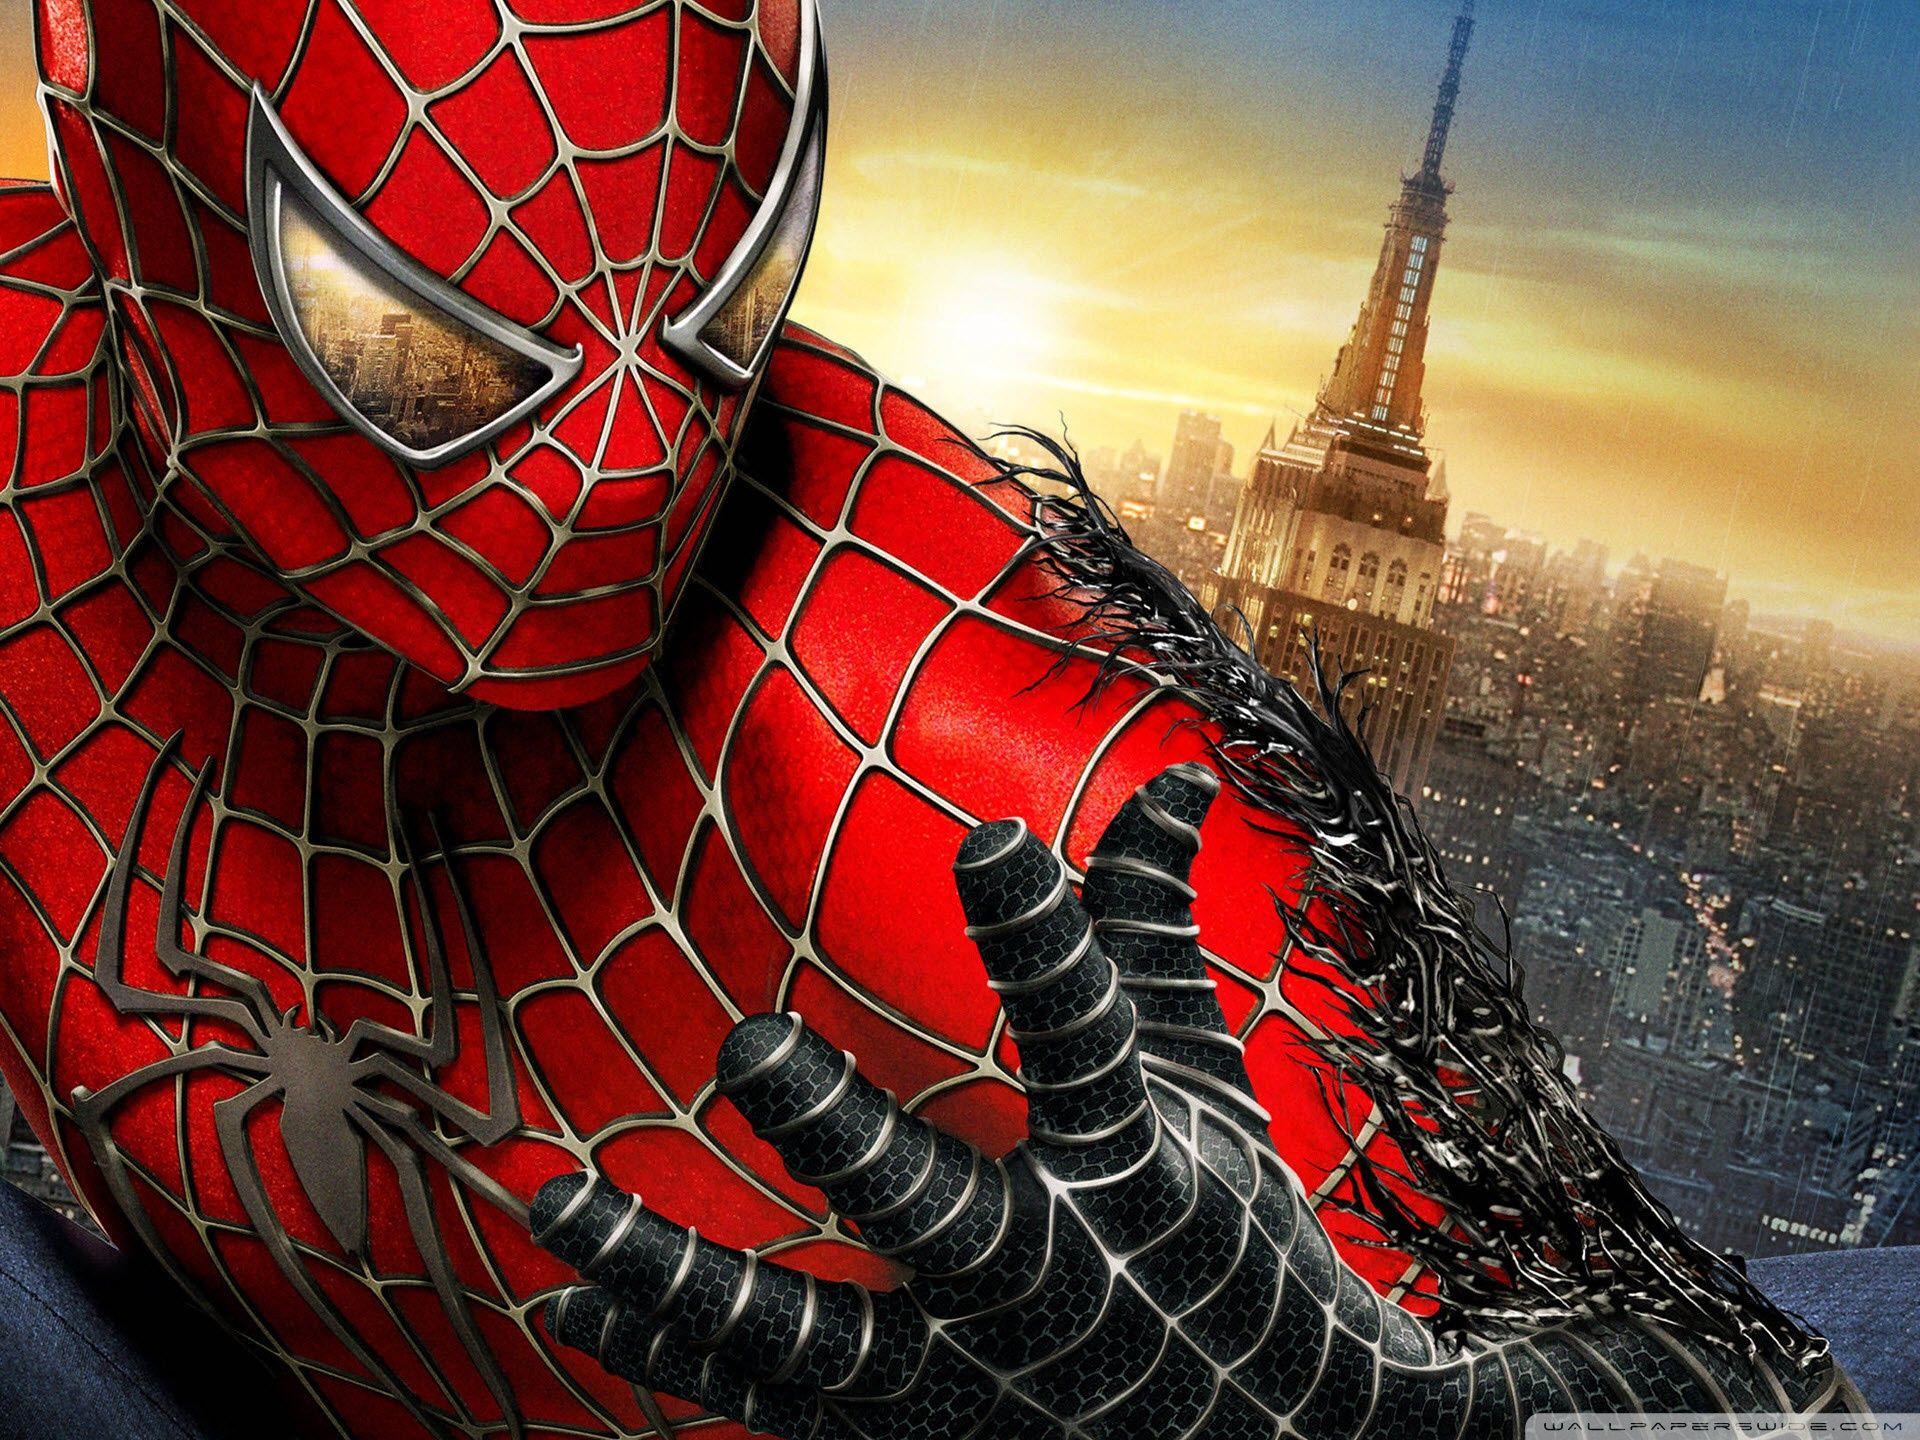 Best Spiderman iPhone HD Wallpapers - iLikeWallpaper